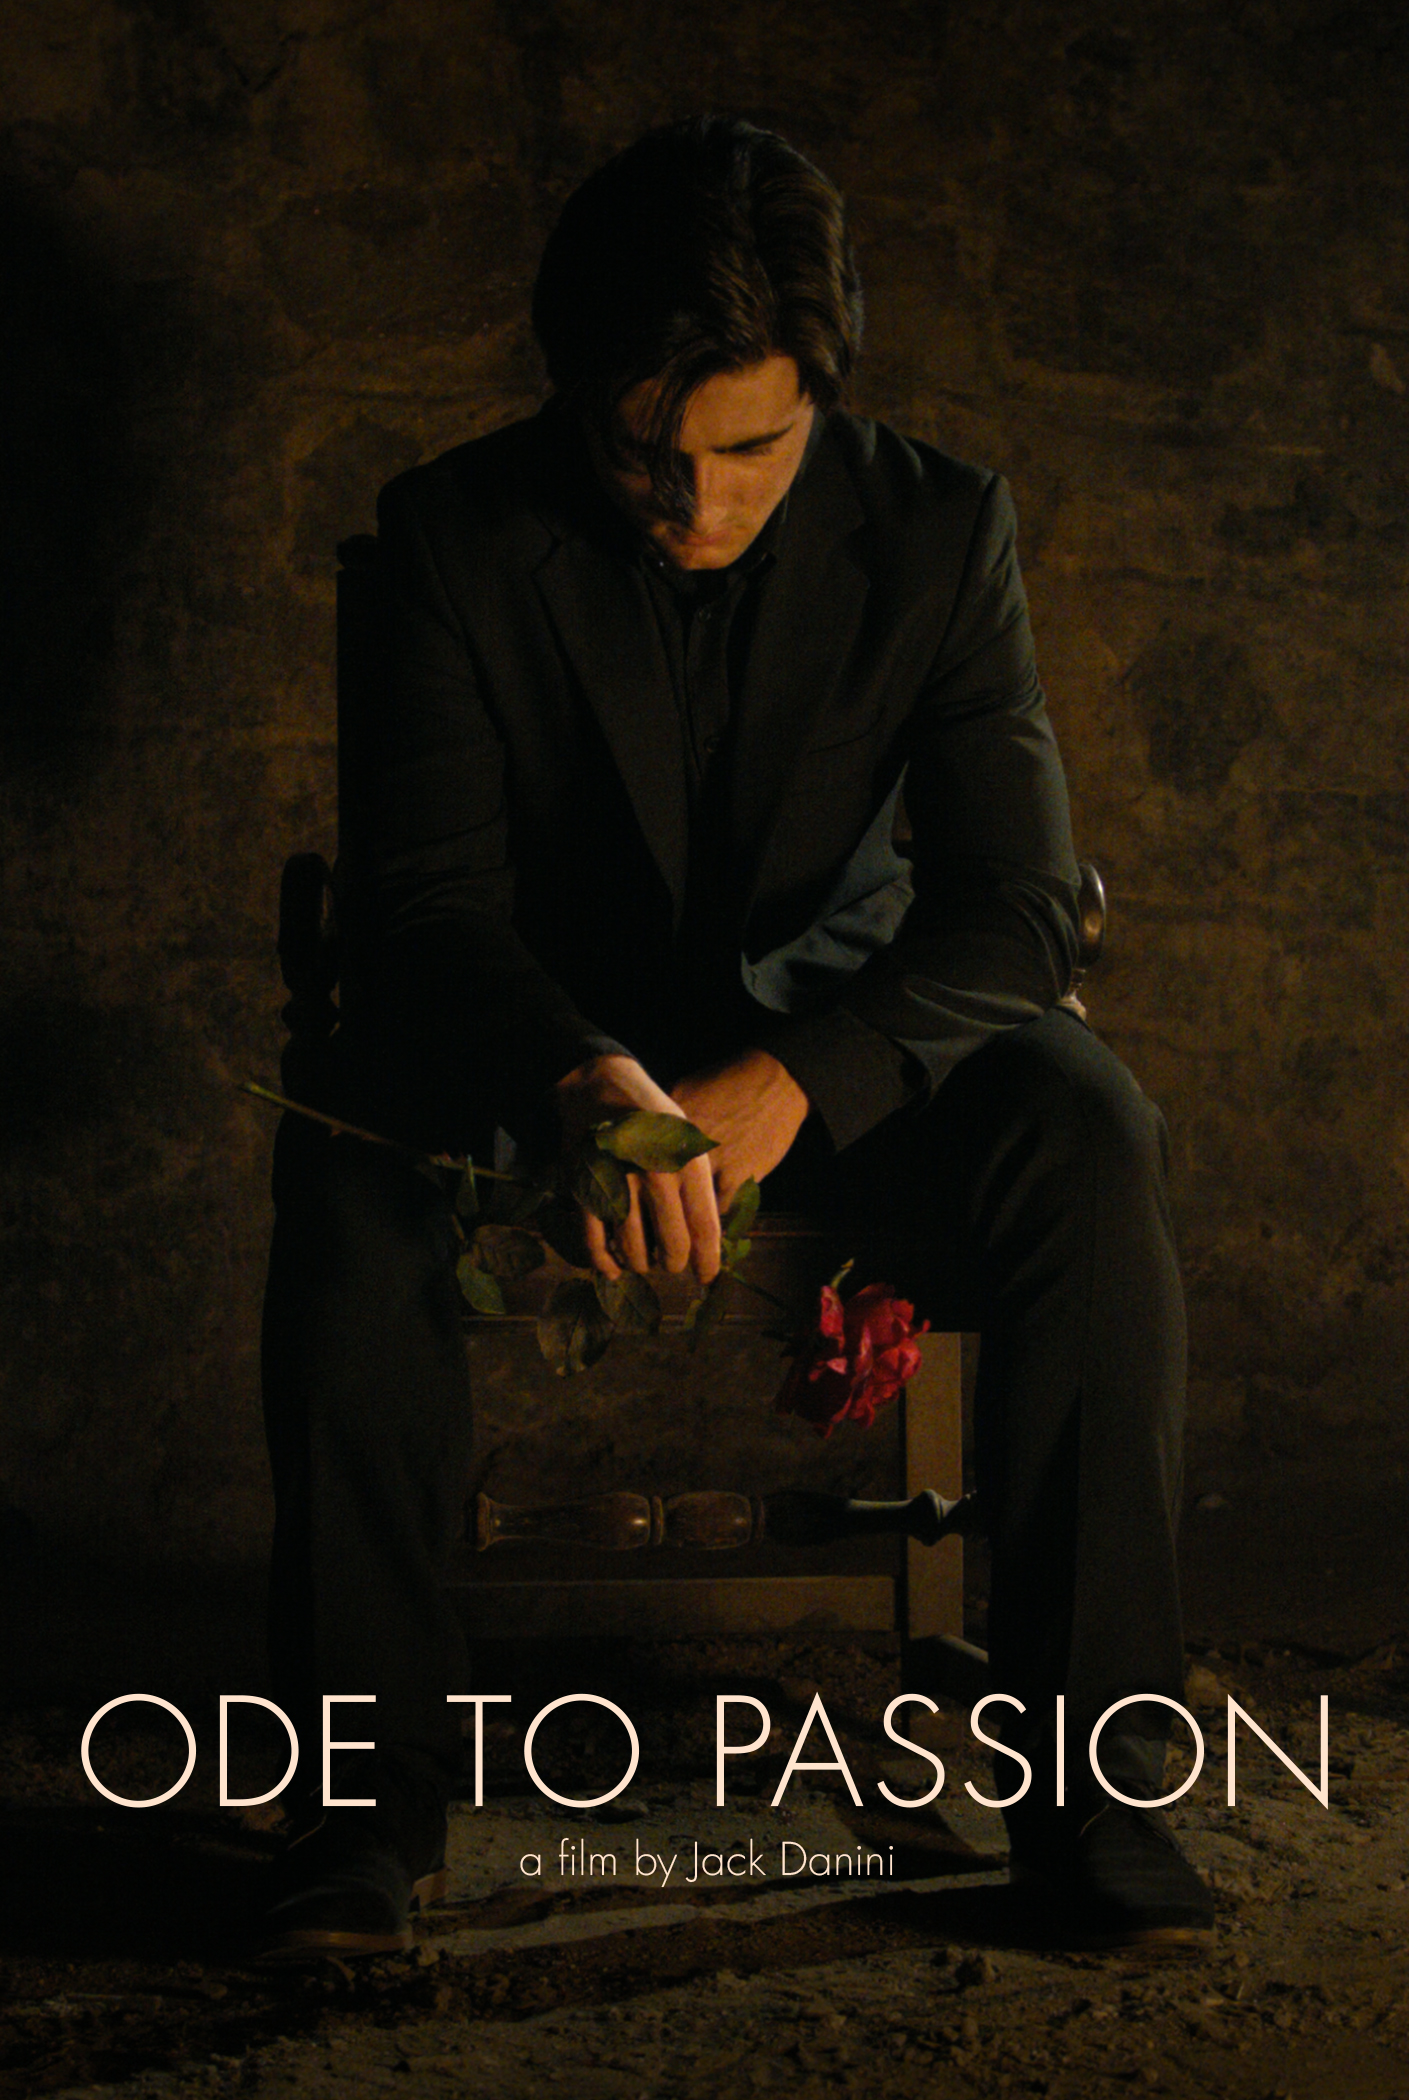 Nonton film Ode to Passion layarkaca21 indoxx1 ganool online streaming terbaru